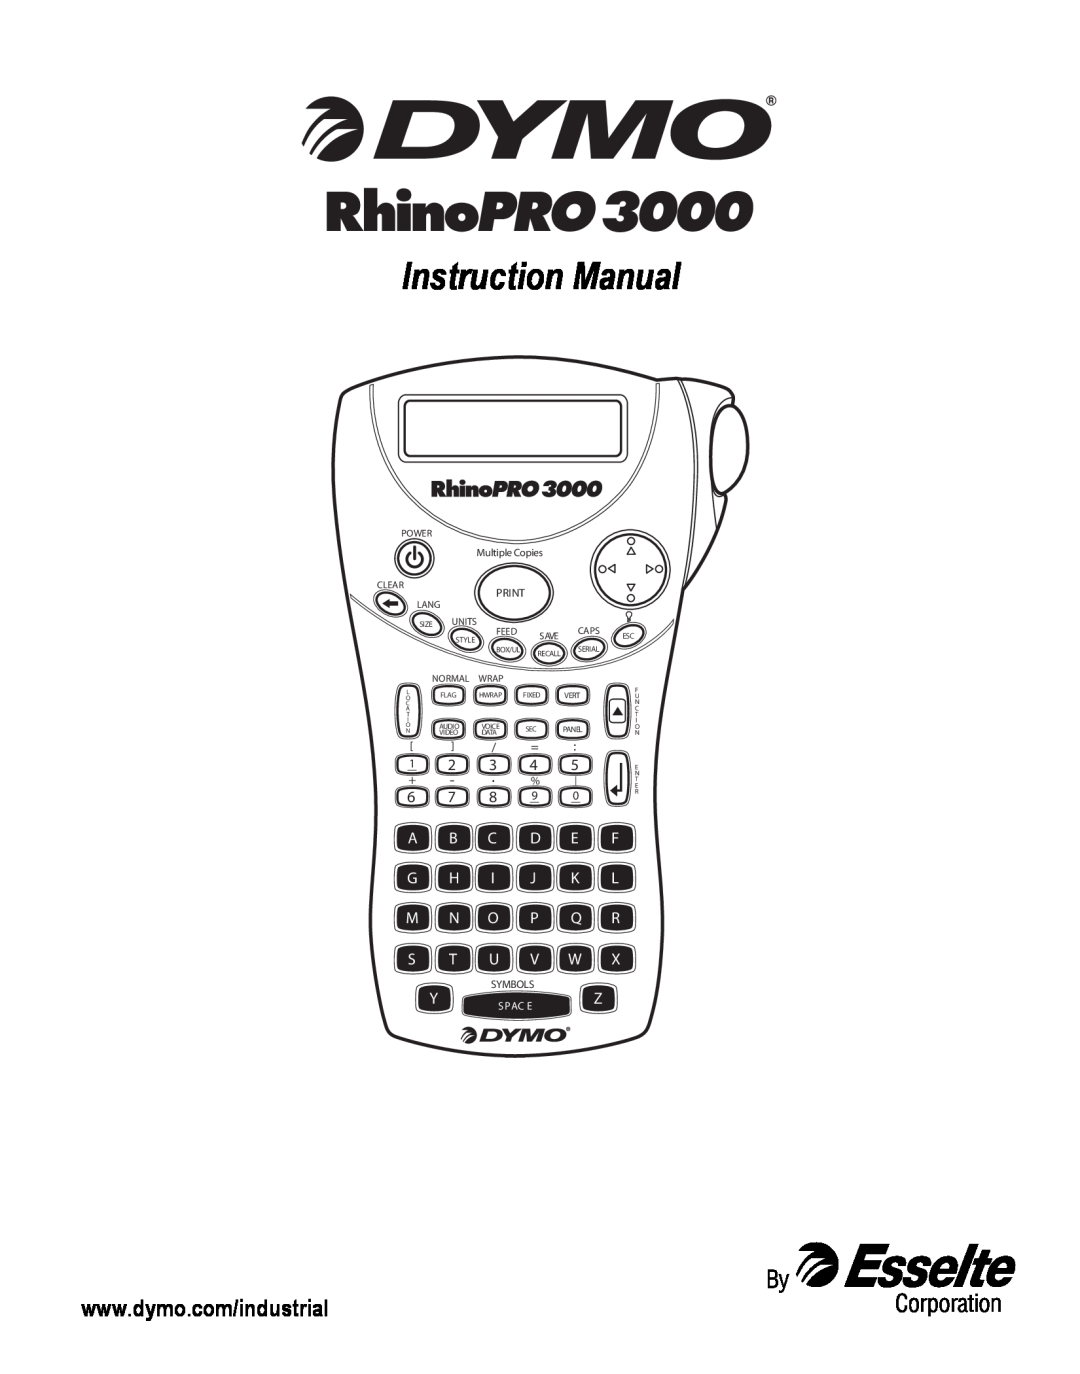 Dymo 3000, 5000, 6000 manual Telephone, Nationwide, E-mail, Internet, info@tonercable.com, Rhino Printer Selection Guide 